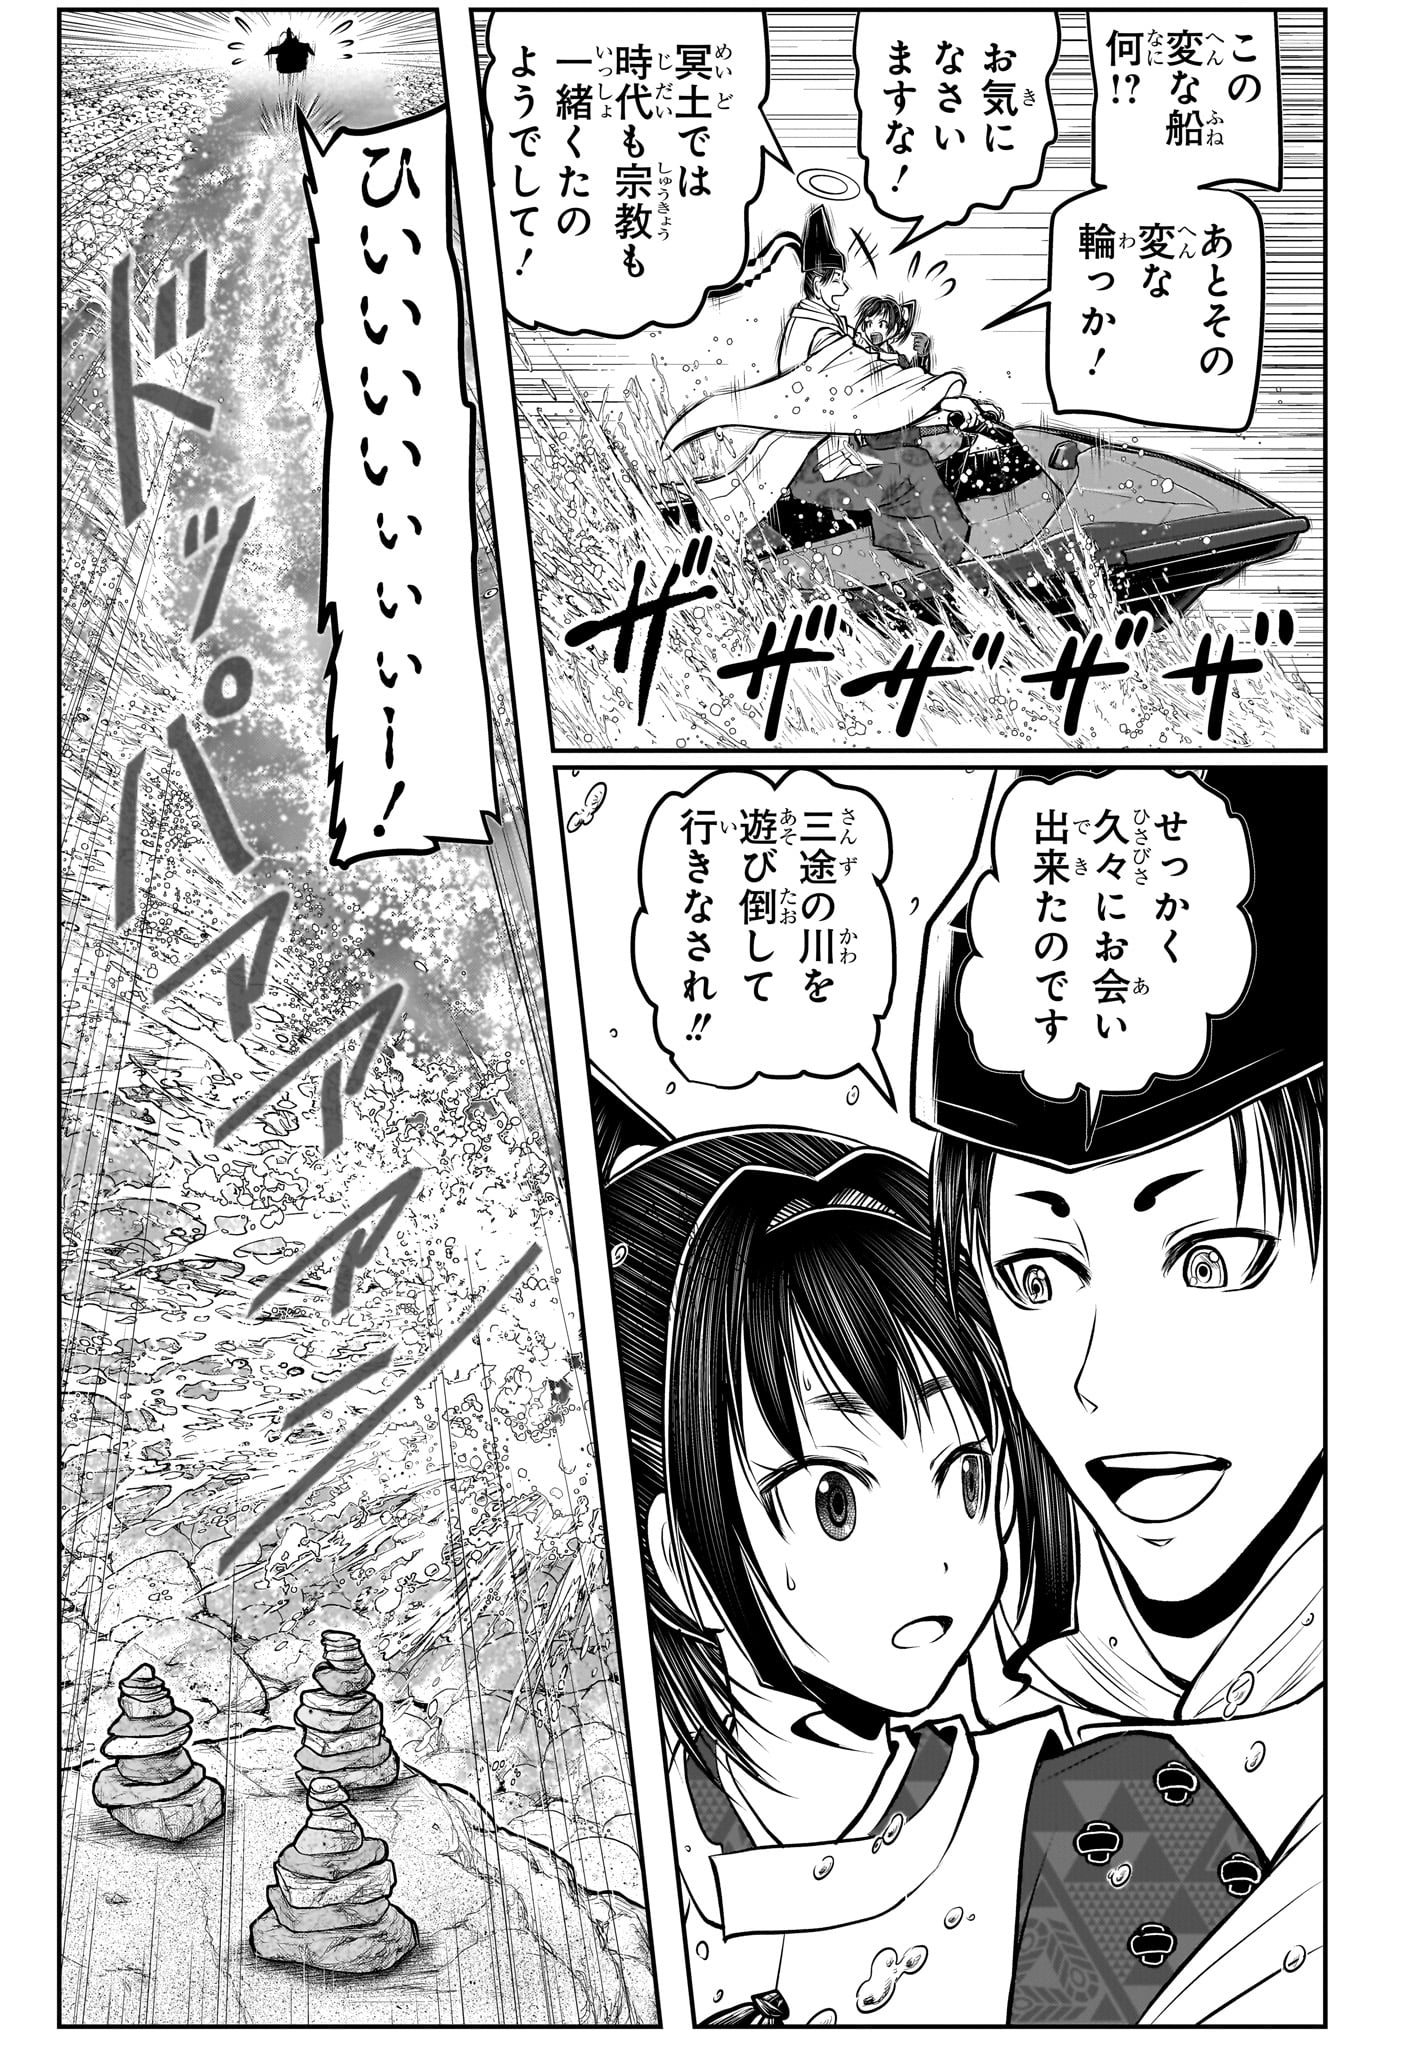 Nige Jouzu no Wakagimi - Chapter 147 - Page 17